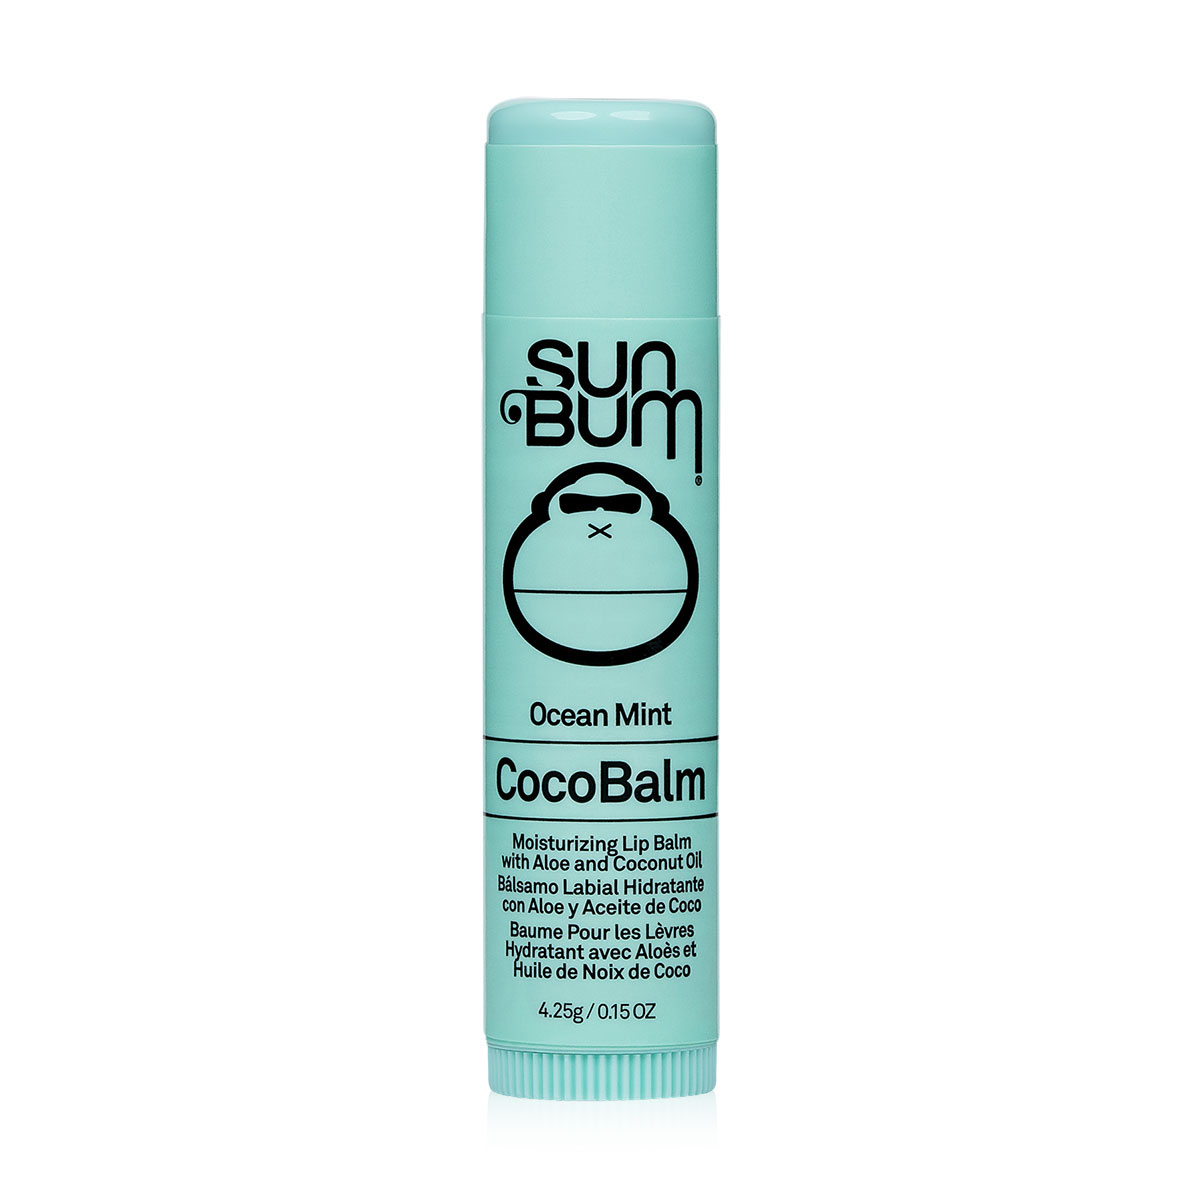 Sun Bum Cocobalm Moisturizing Lip Balm - Ocean Mint 4.25G